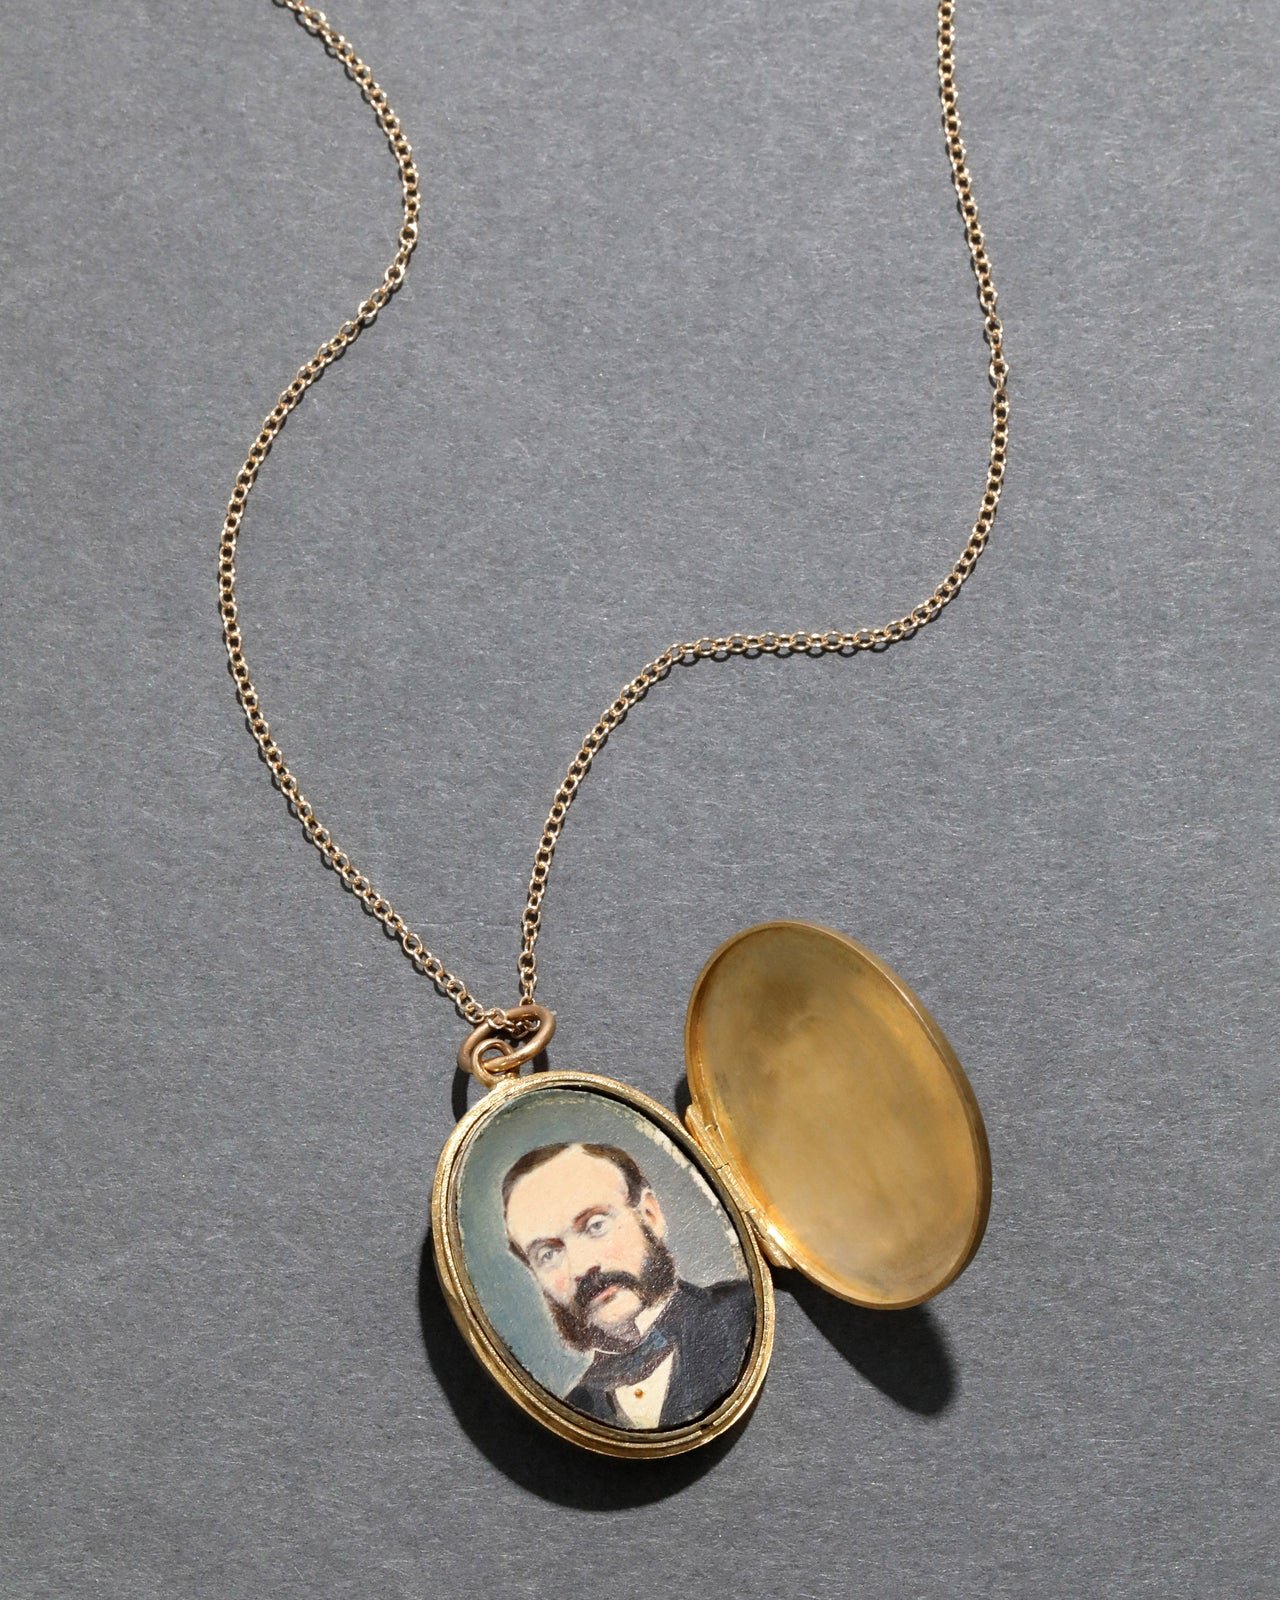 Antique 1840s 14k Gold Oval Locket Necklace - Photo 2